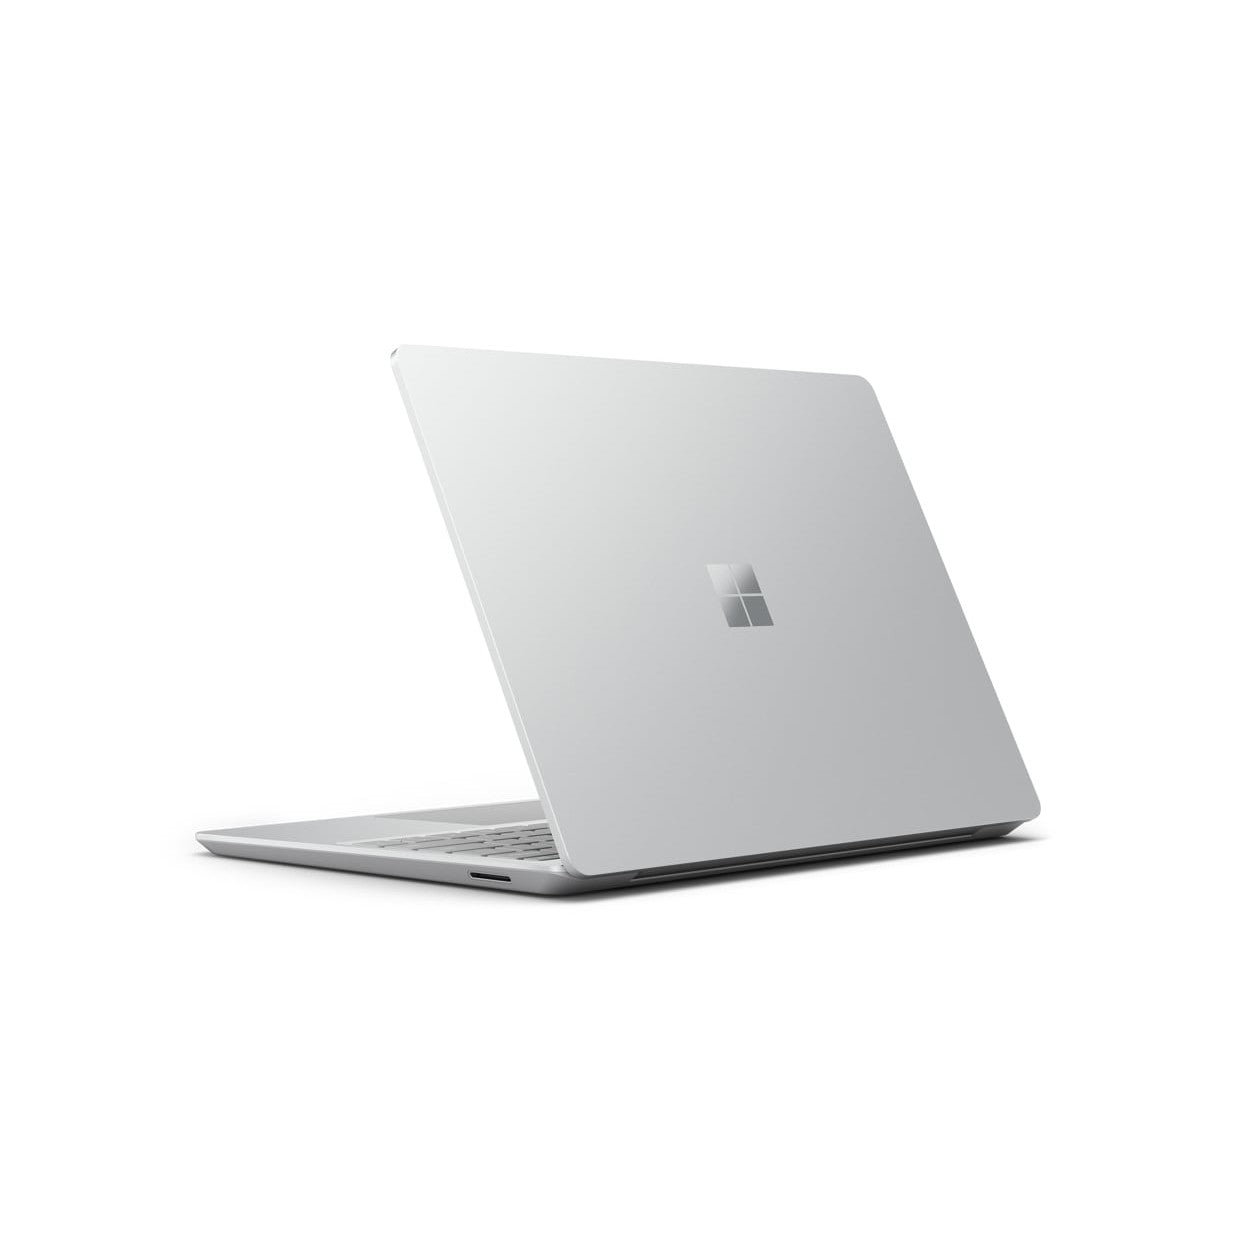 Microsoft Surface Go THJ-00026 Intel Core i5-1035G1 8GB RAM 256GB - Silver